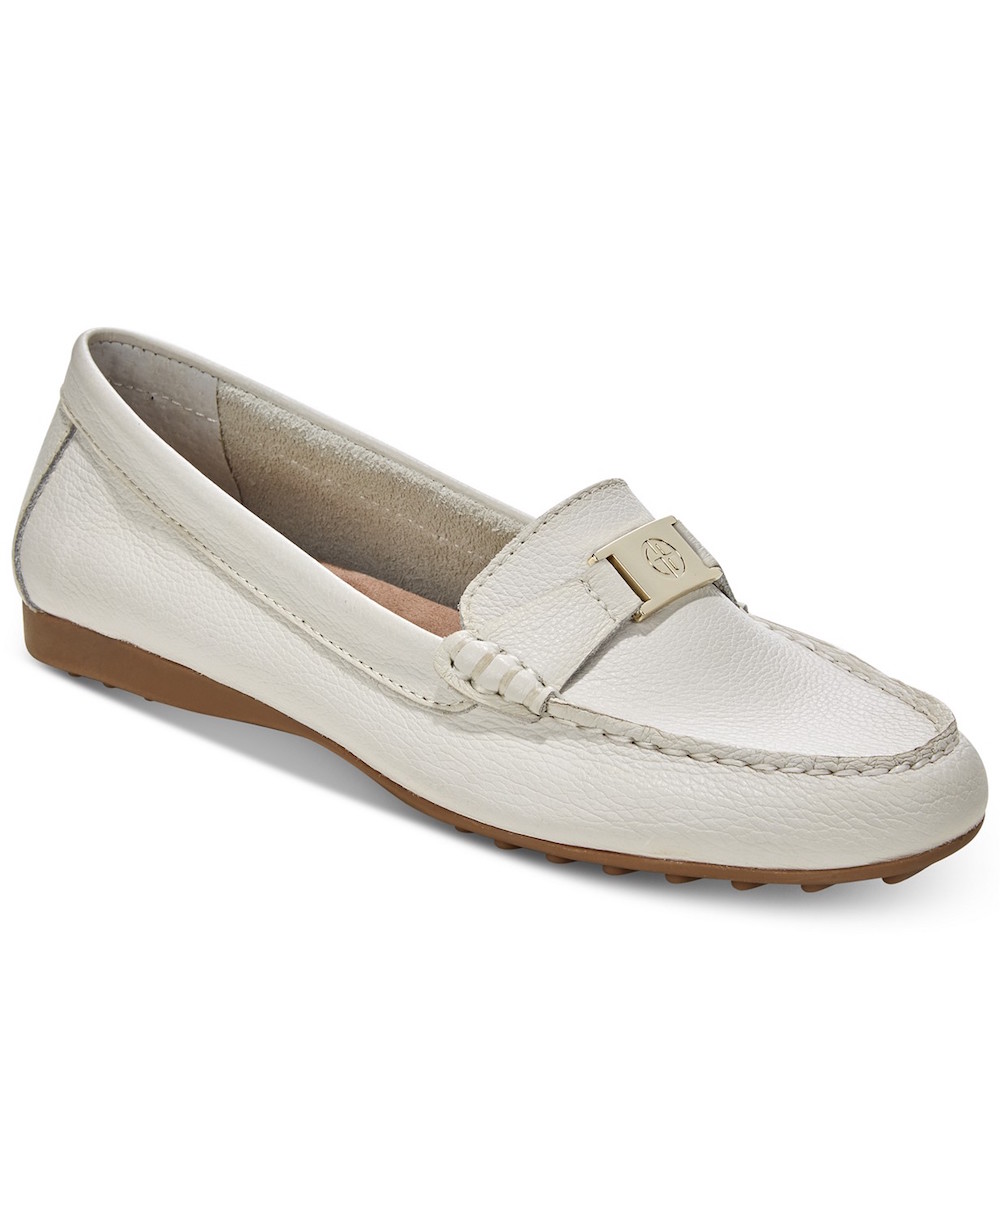 Giani Bernini Womens Dailyn Leather Closed Toe Loafers, White, Size 6.0 ...